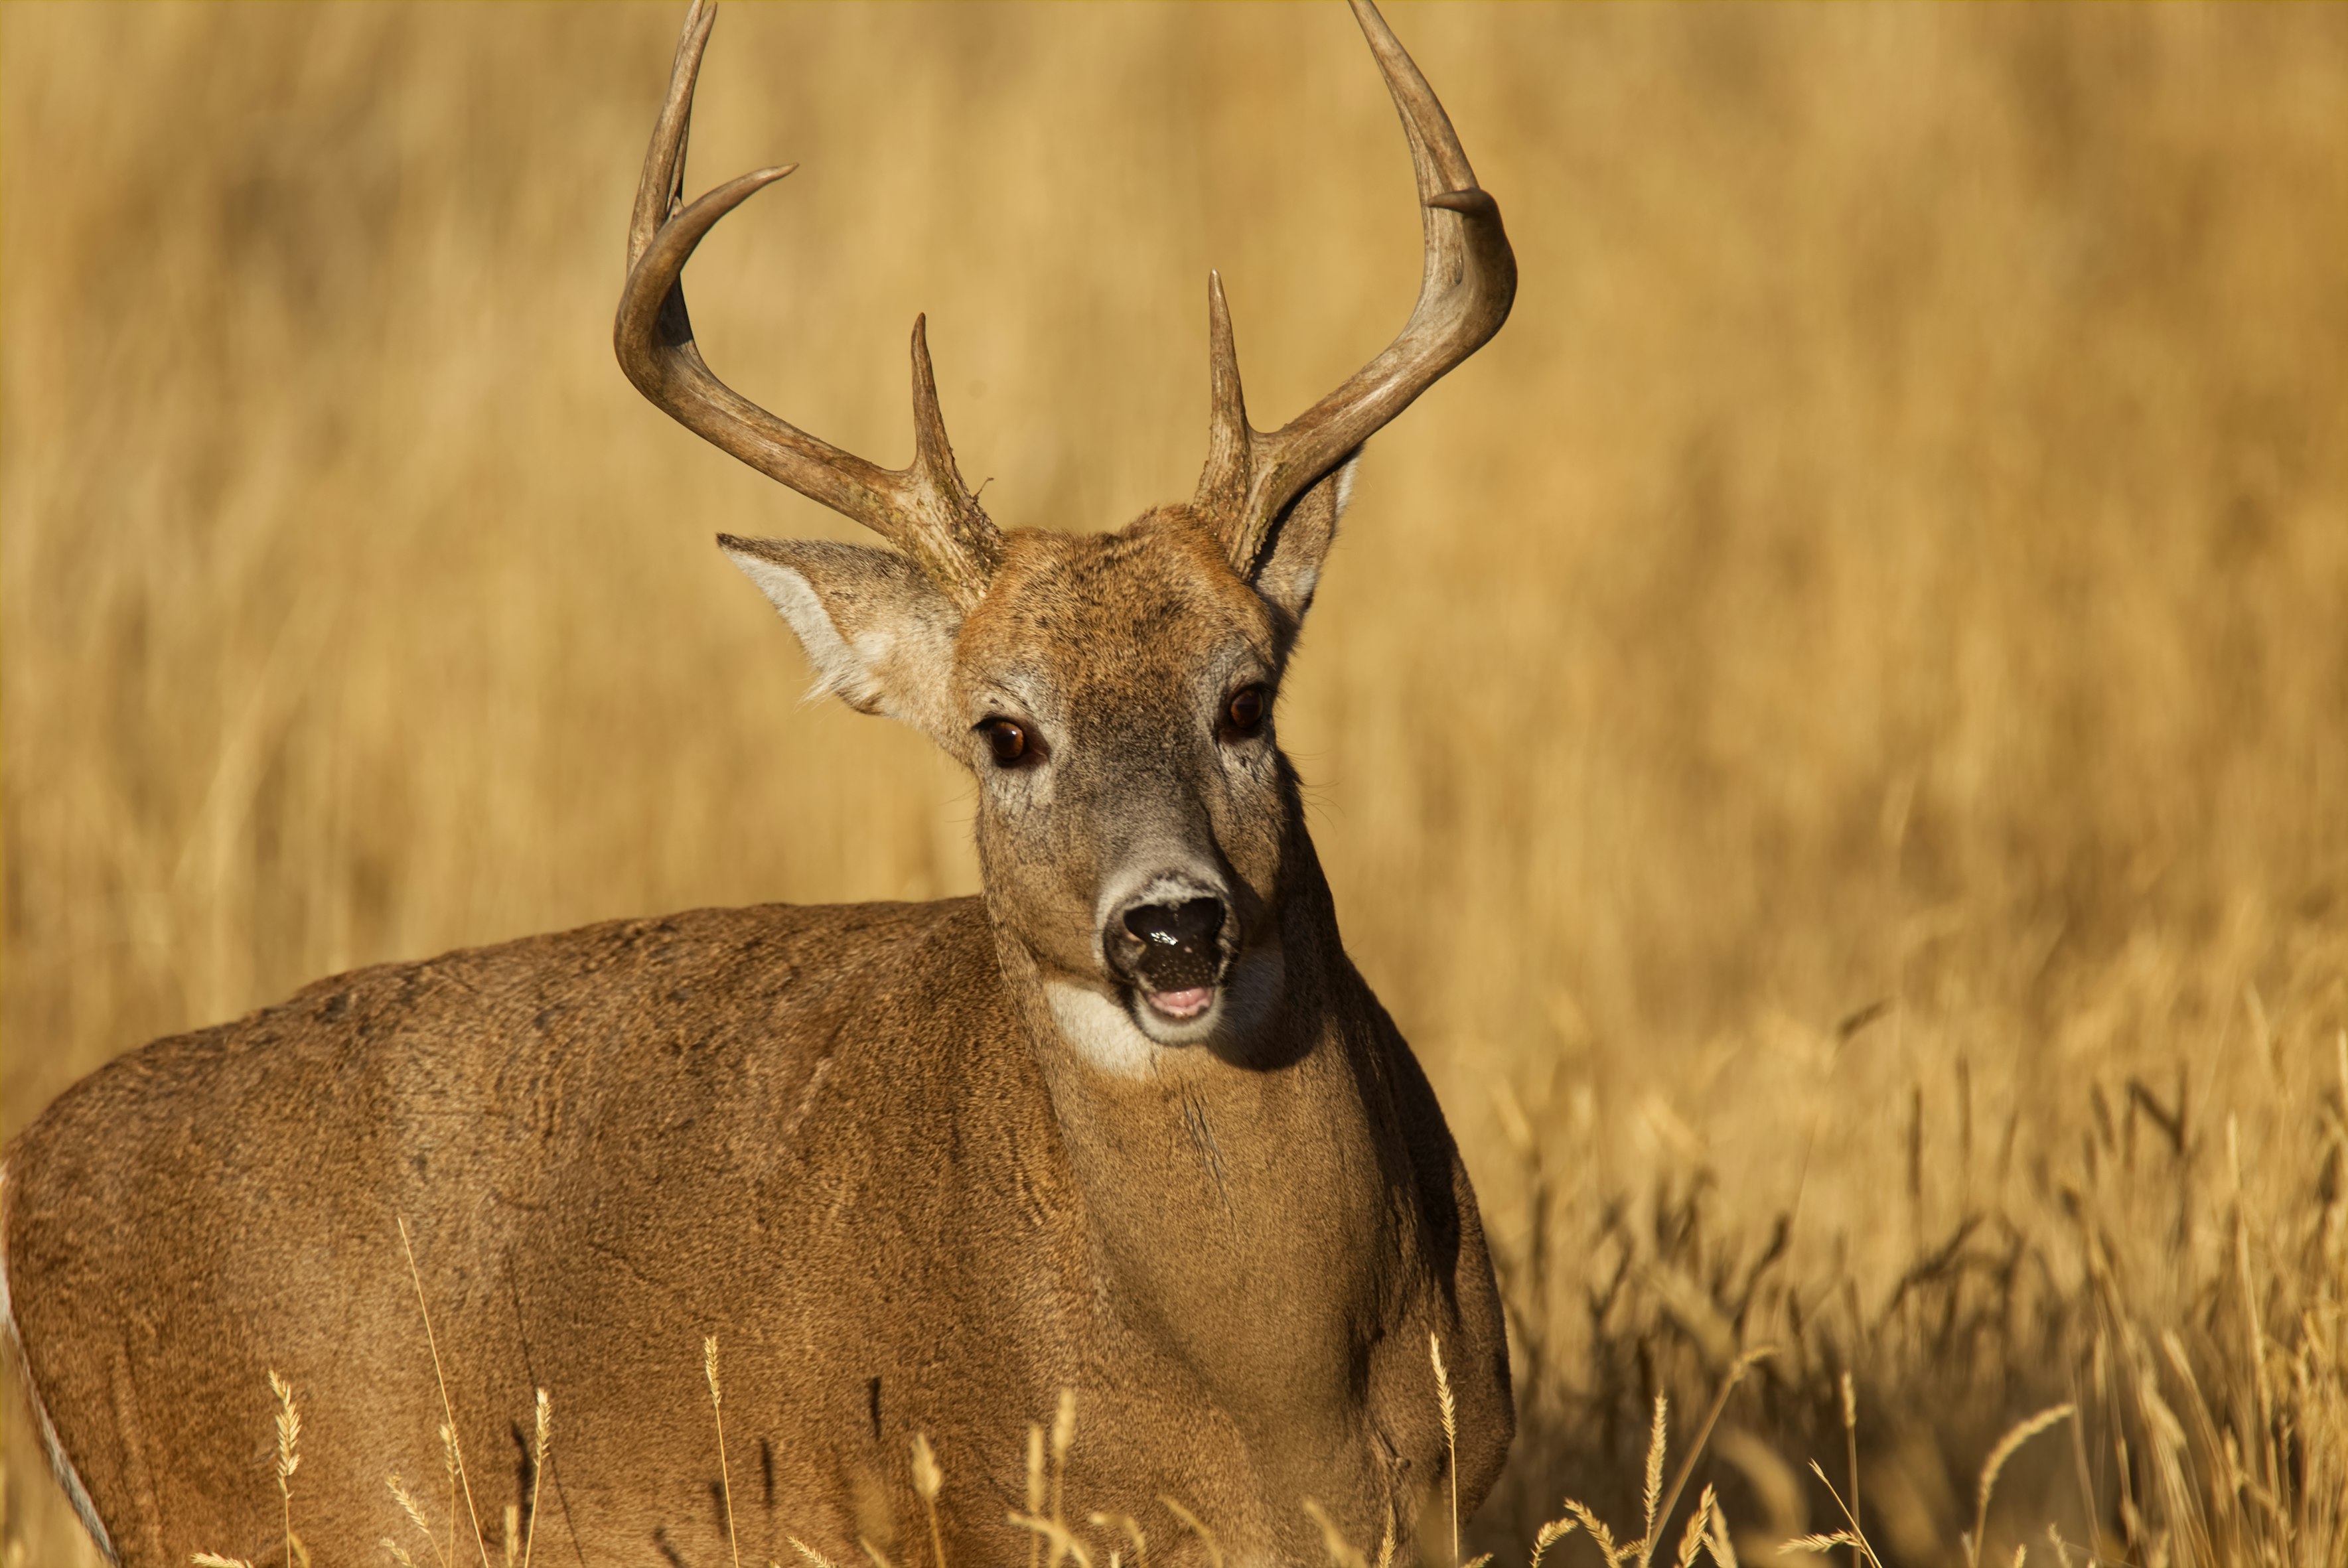 Does Culling Wild Deer Populations Result in Improved Antler Genetics?